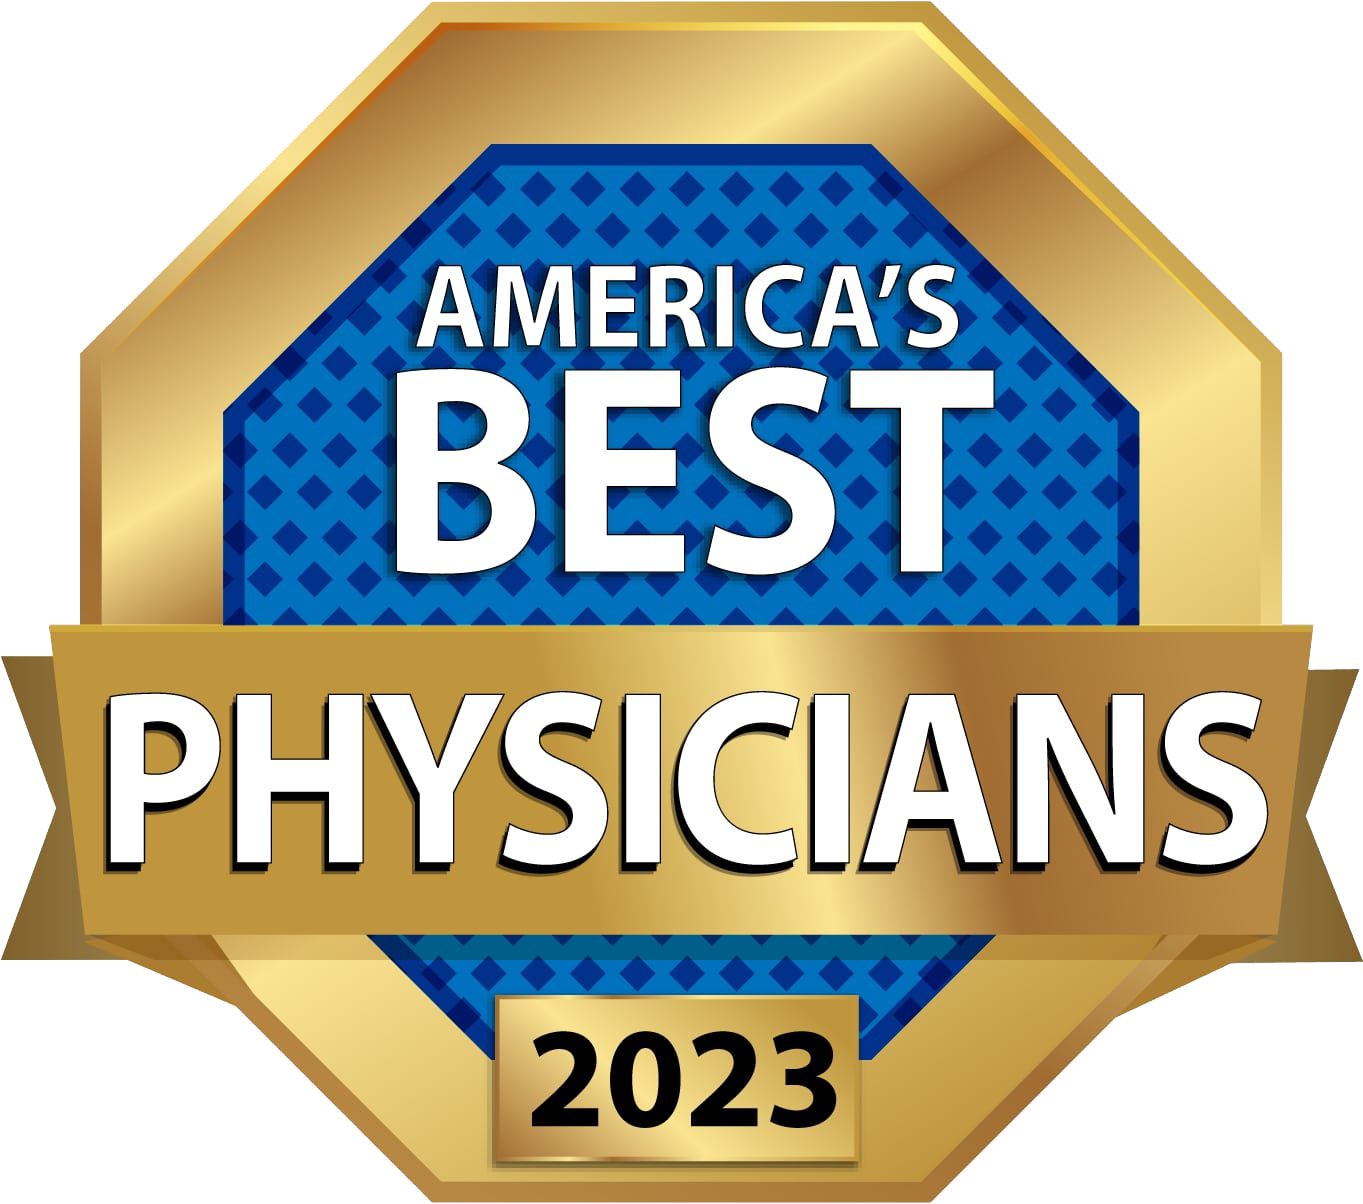 America's Best Physicians 2023 logo